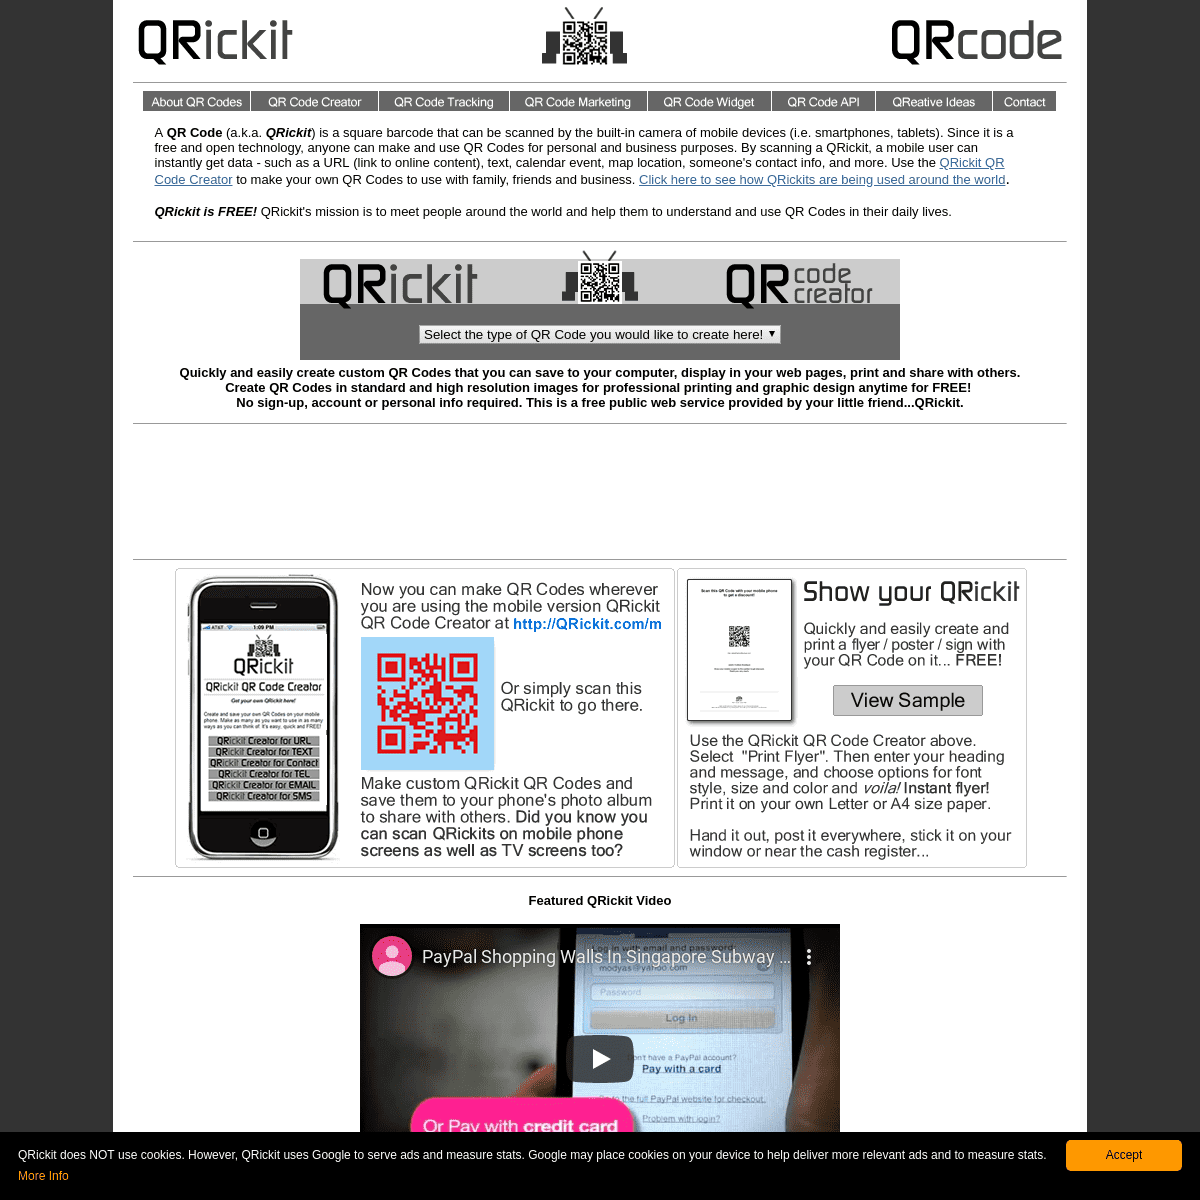 A complete backup of qrickit.com